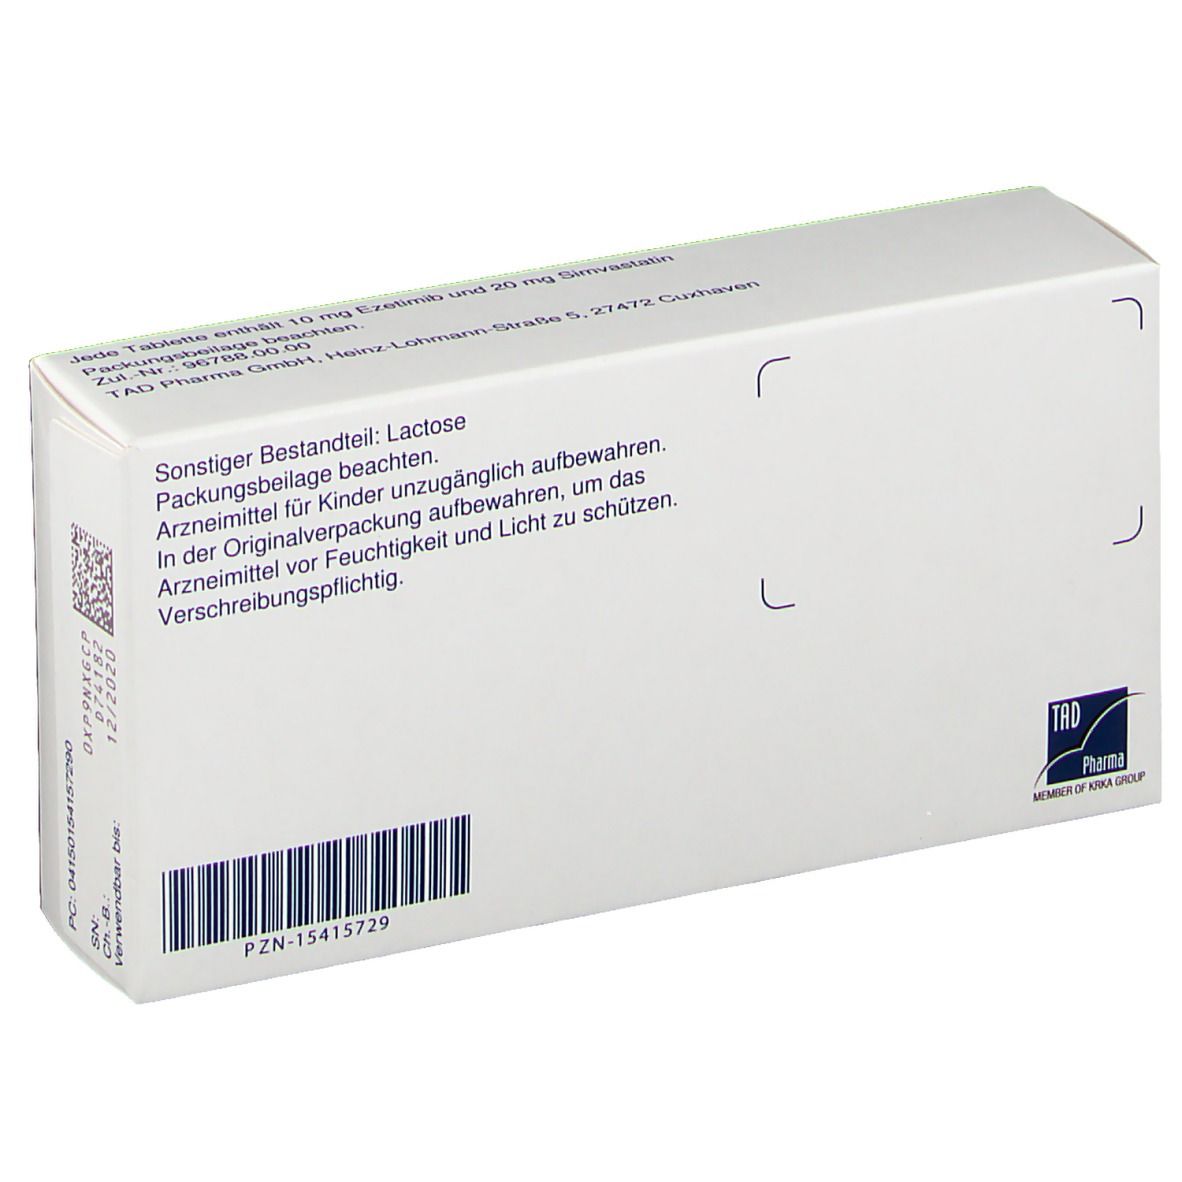 Ezesimin® 10 mg/20 mg